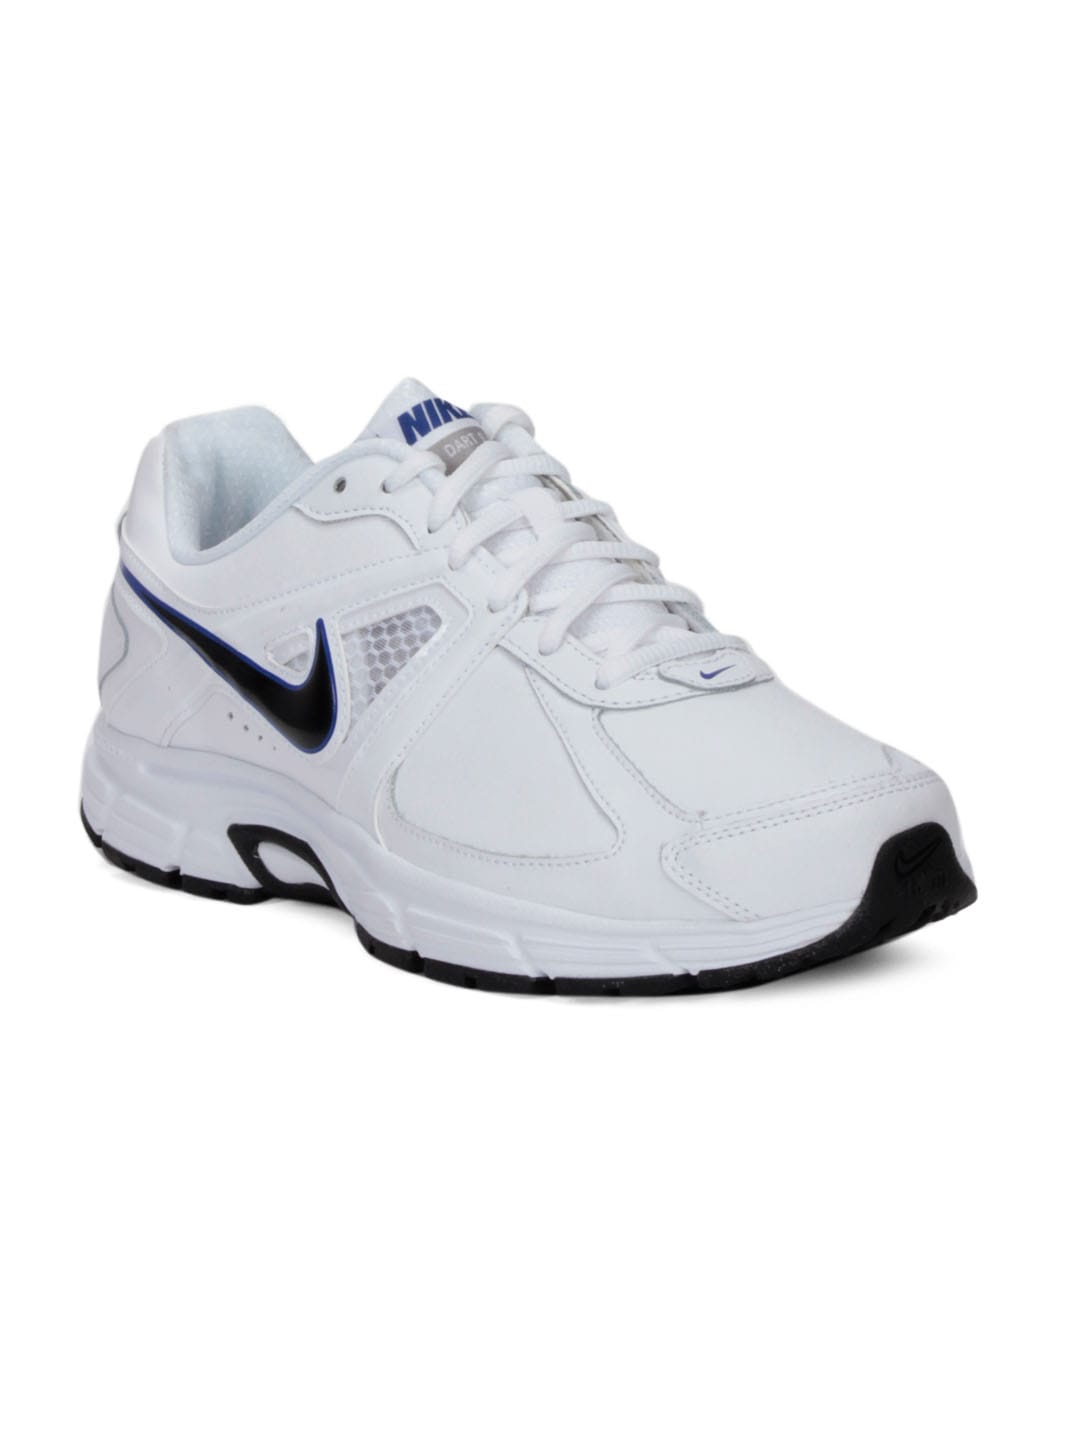 Nike Men Dart 9 Leather White Sports Shoes